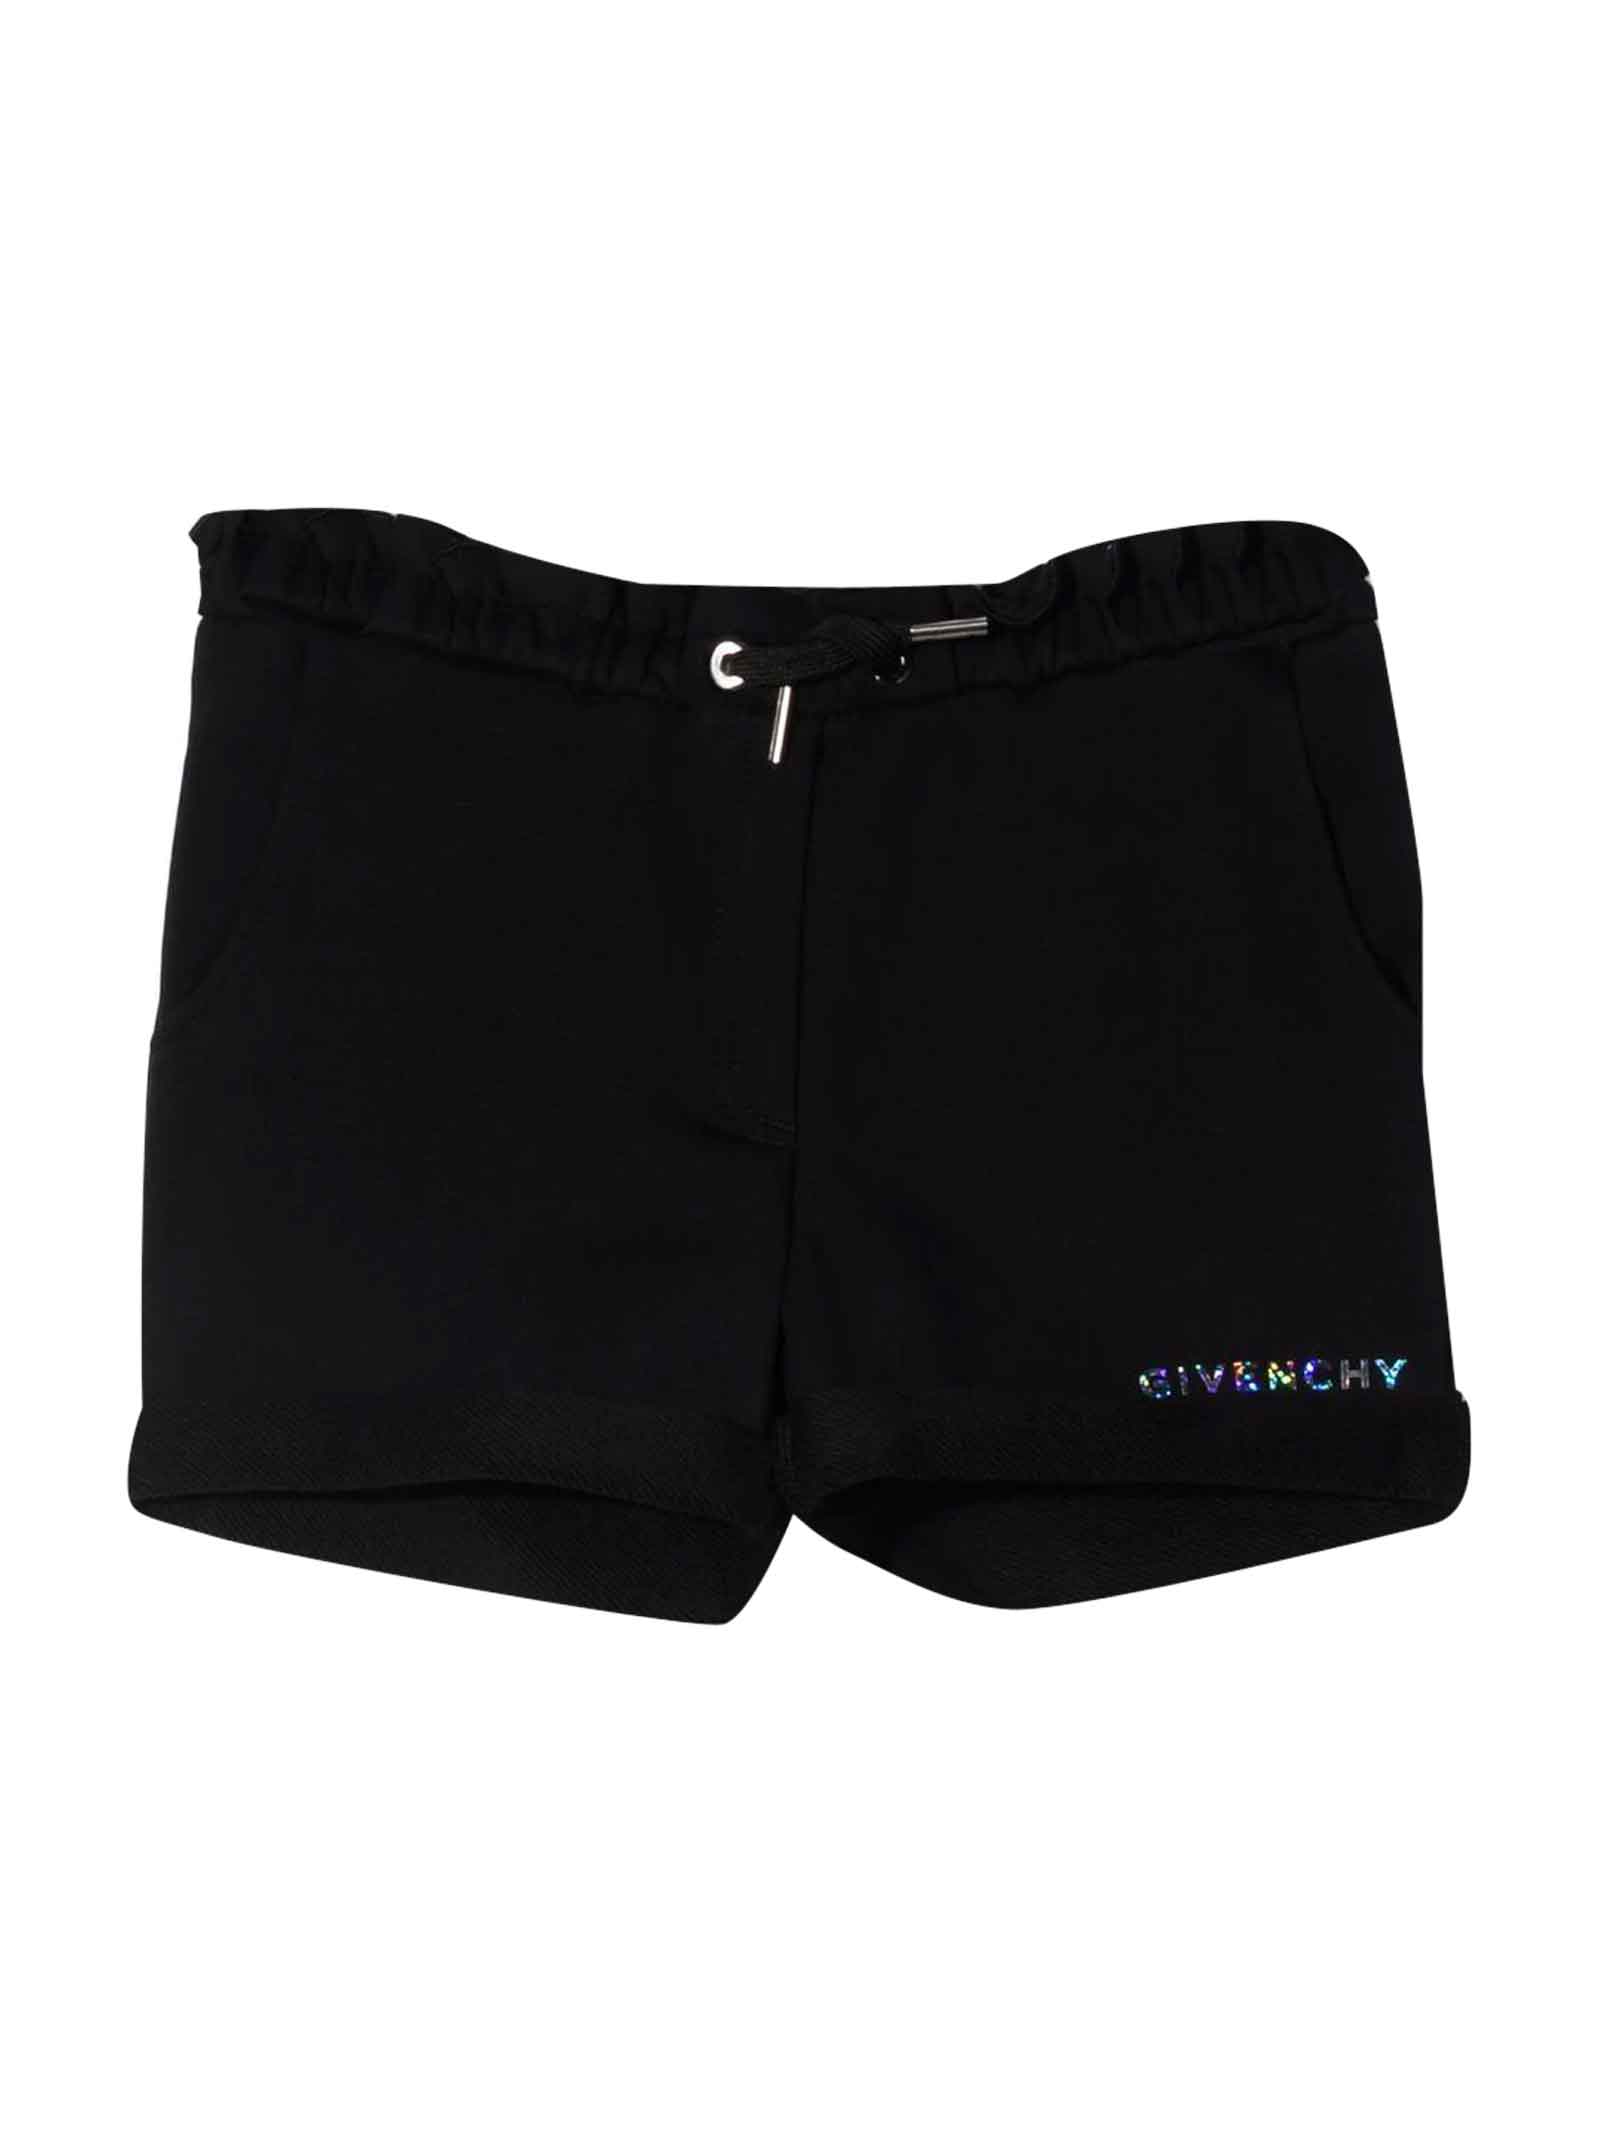 Givenchy Black Shorts Baby Boy